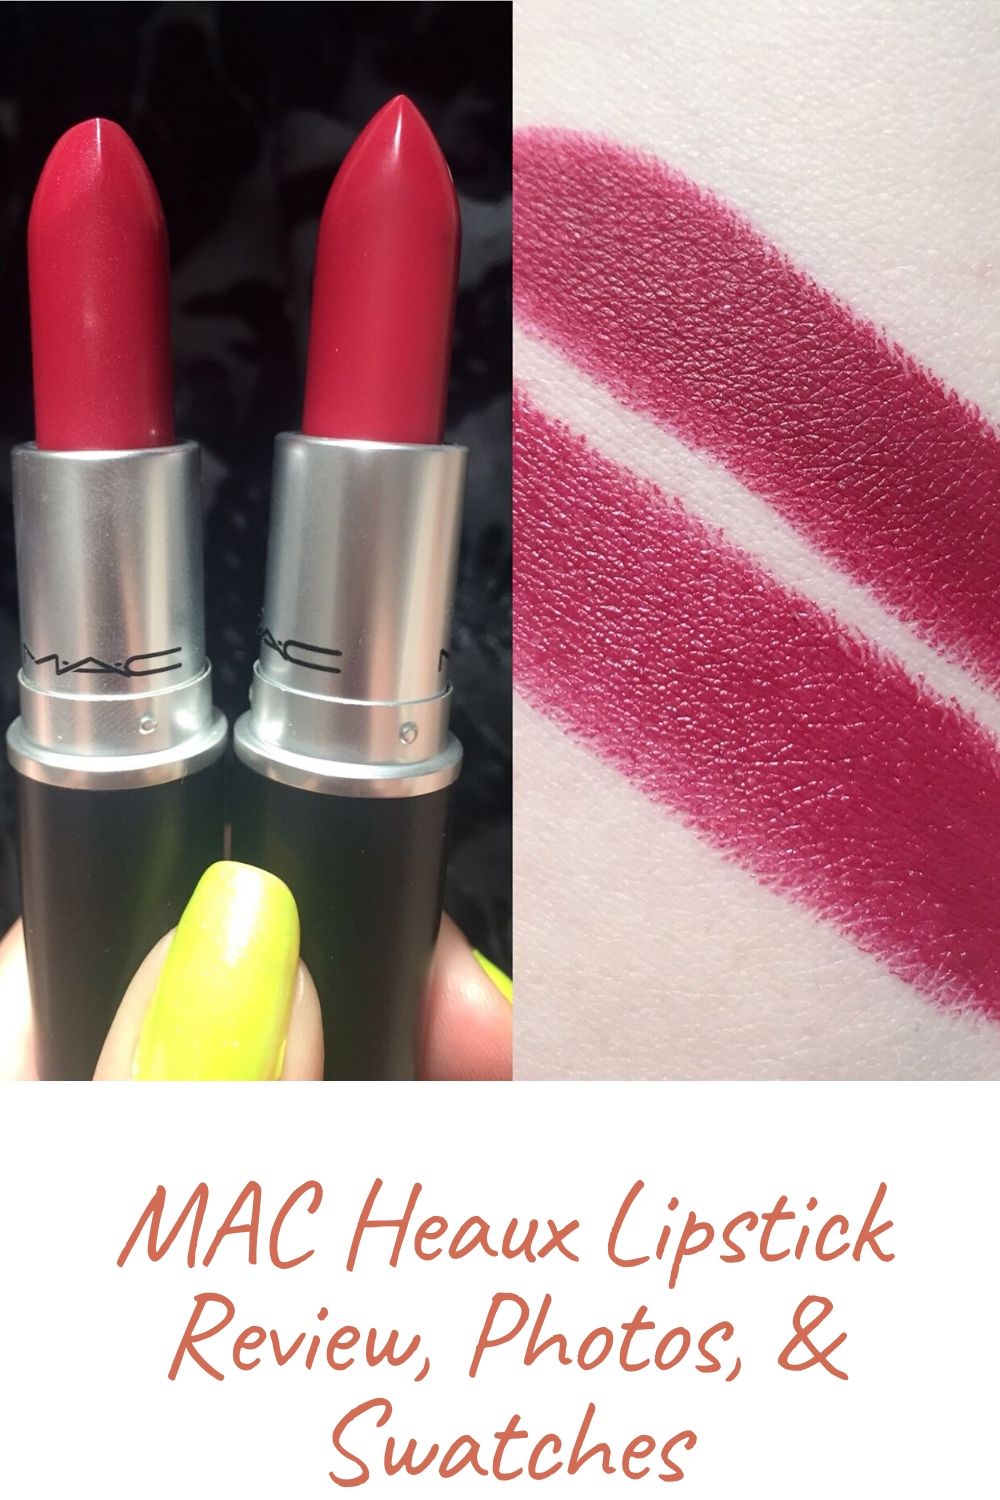 MAC Heaux Lipstick Review, Photos, & Swatches